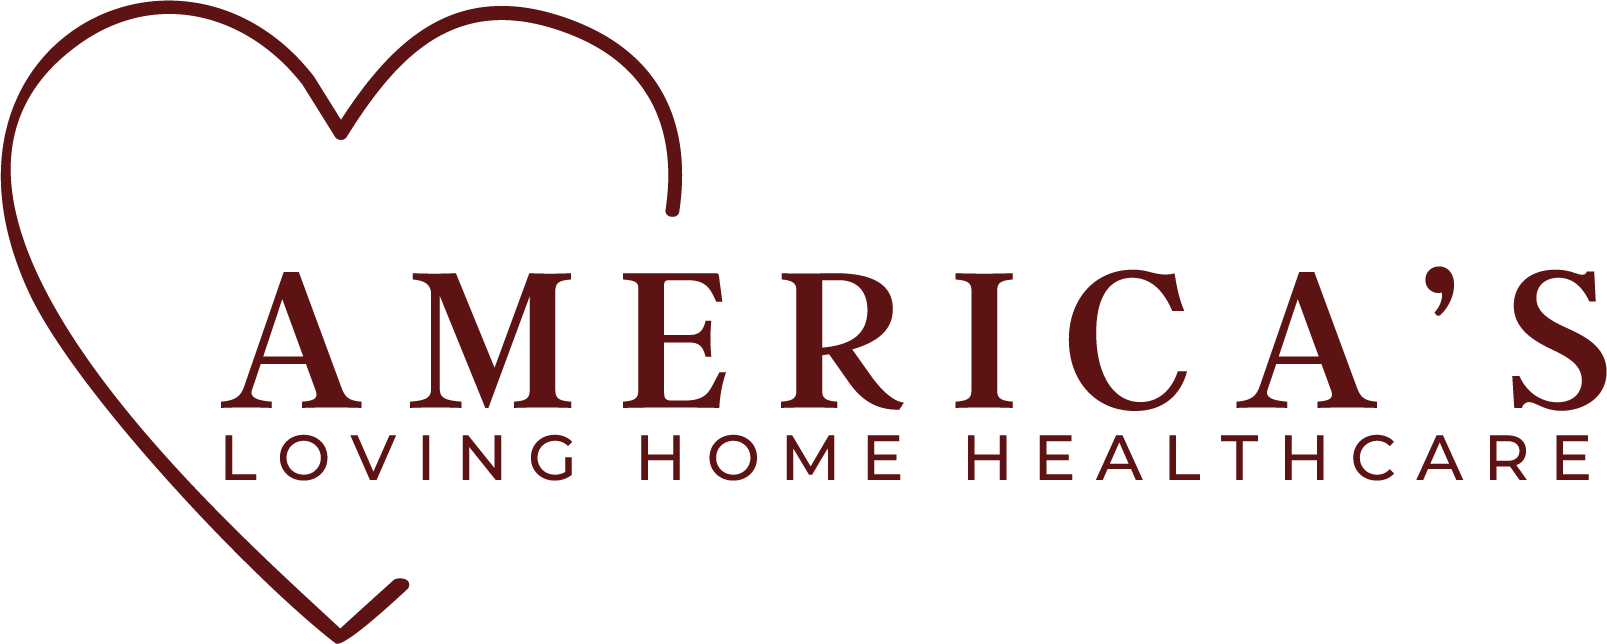 America’s Loving Home Healthcare Logo Burgundy